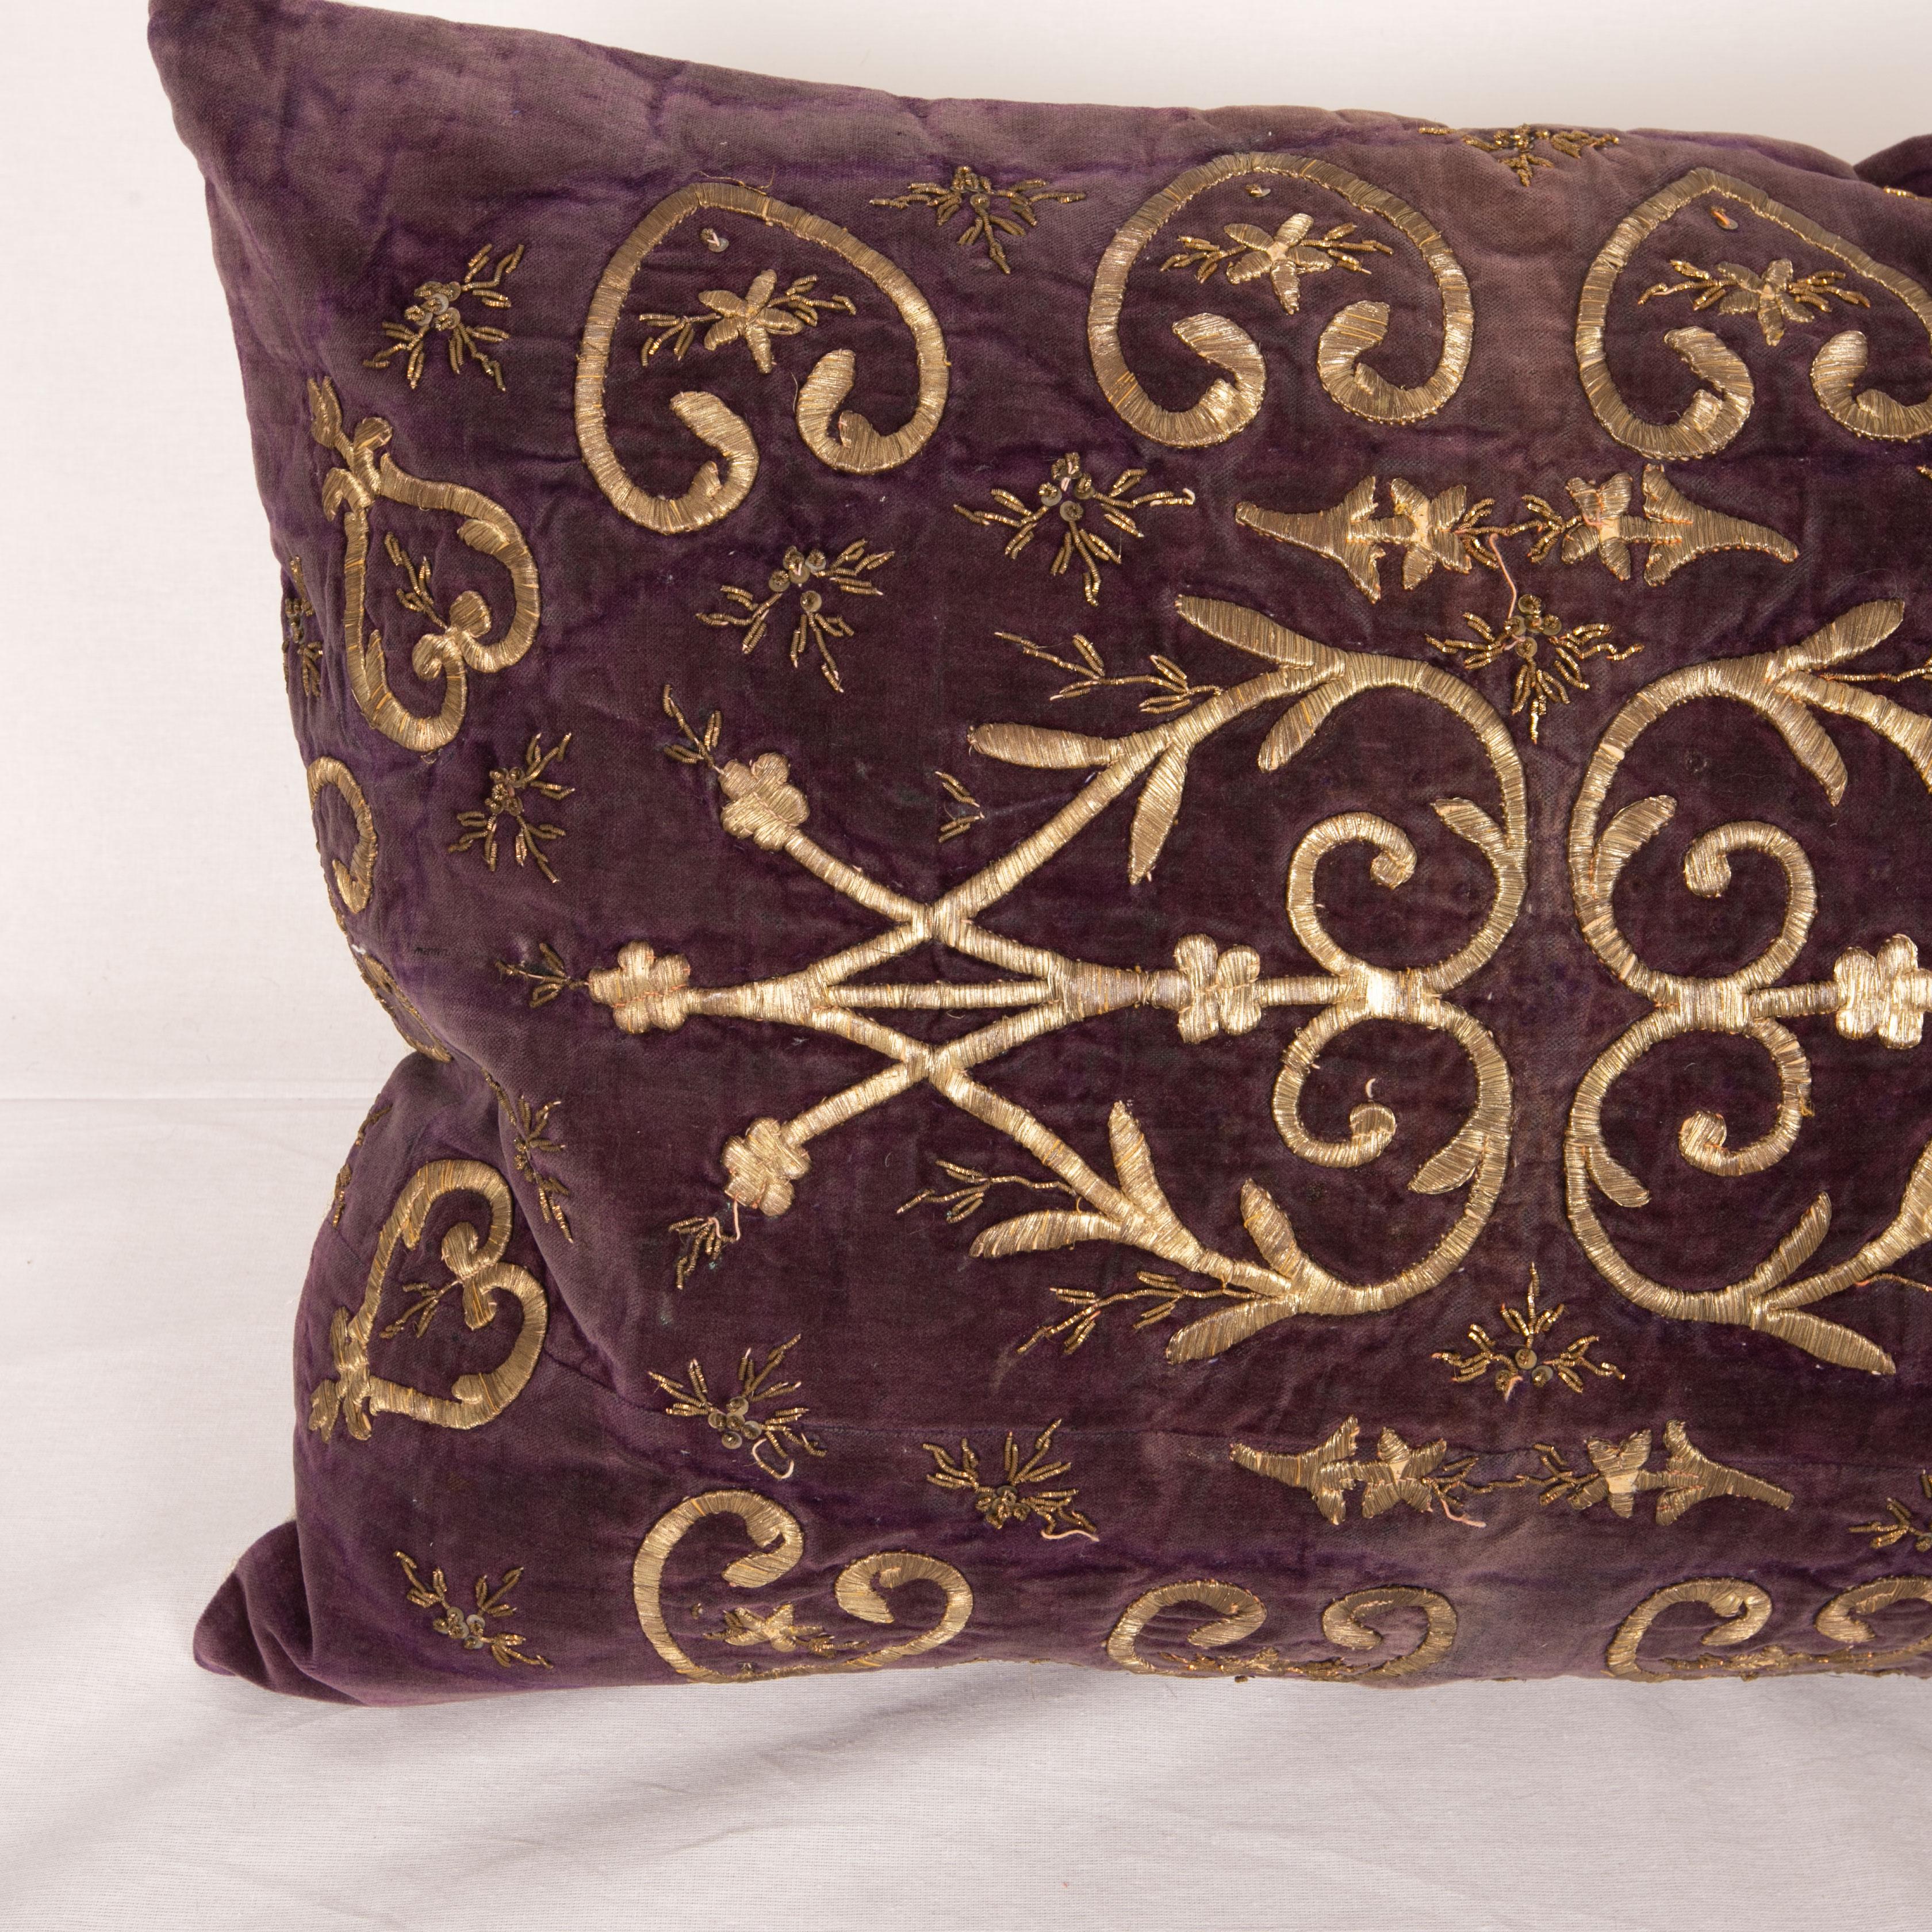 Islamic Antique Ottoman Turkish Sarma Pillow Case, Early 20th C